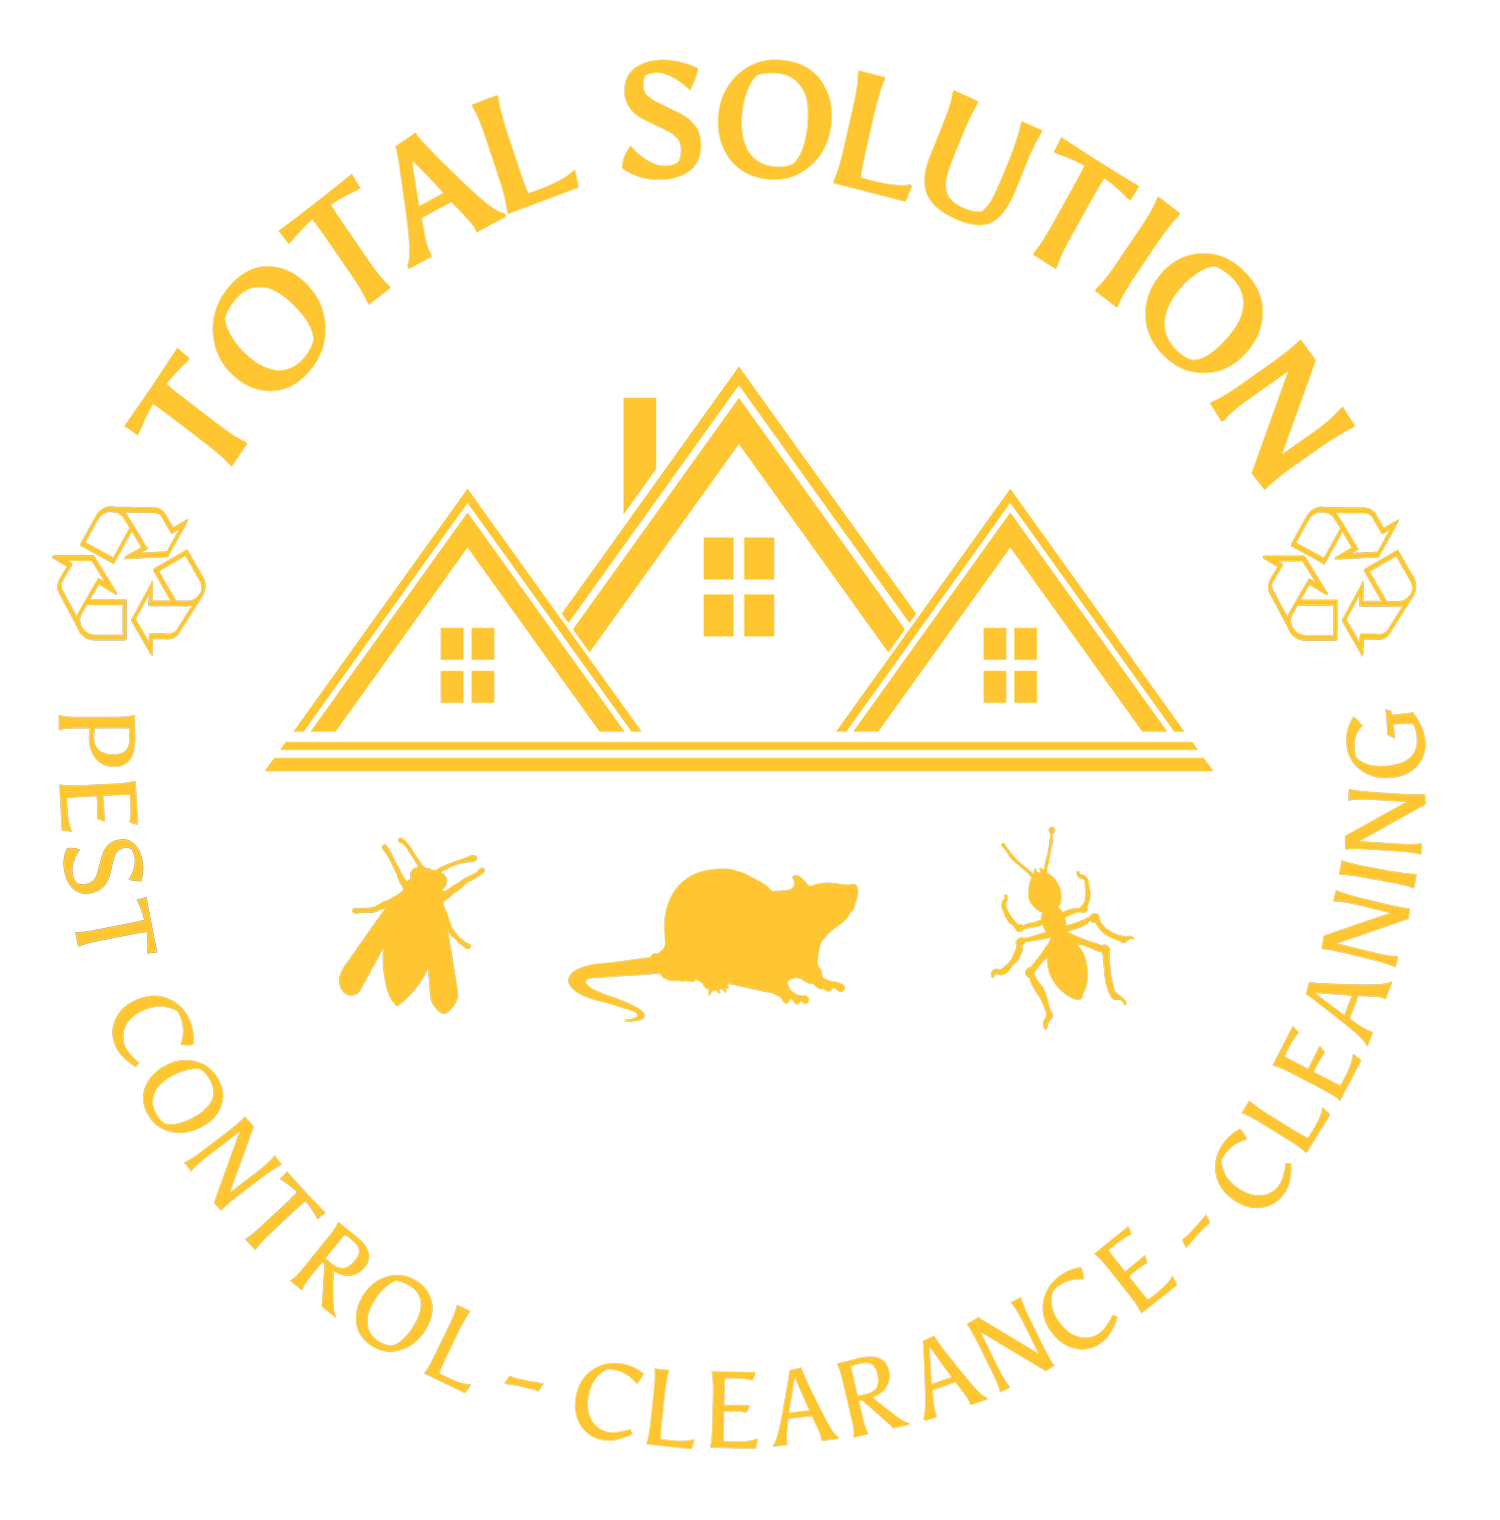 TS - Total Solution Pest Control London Essex